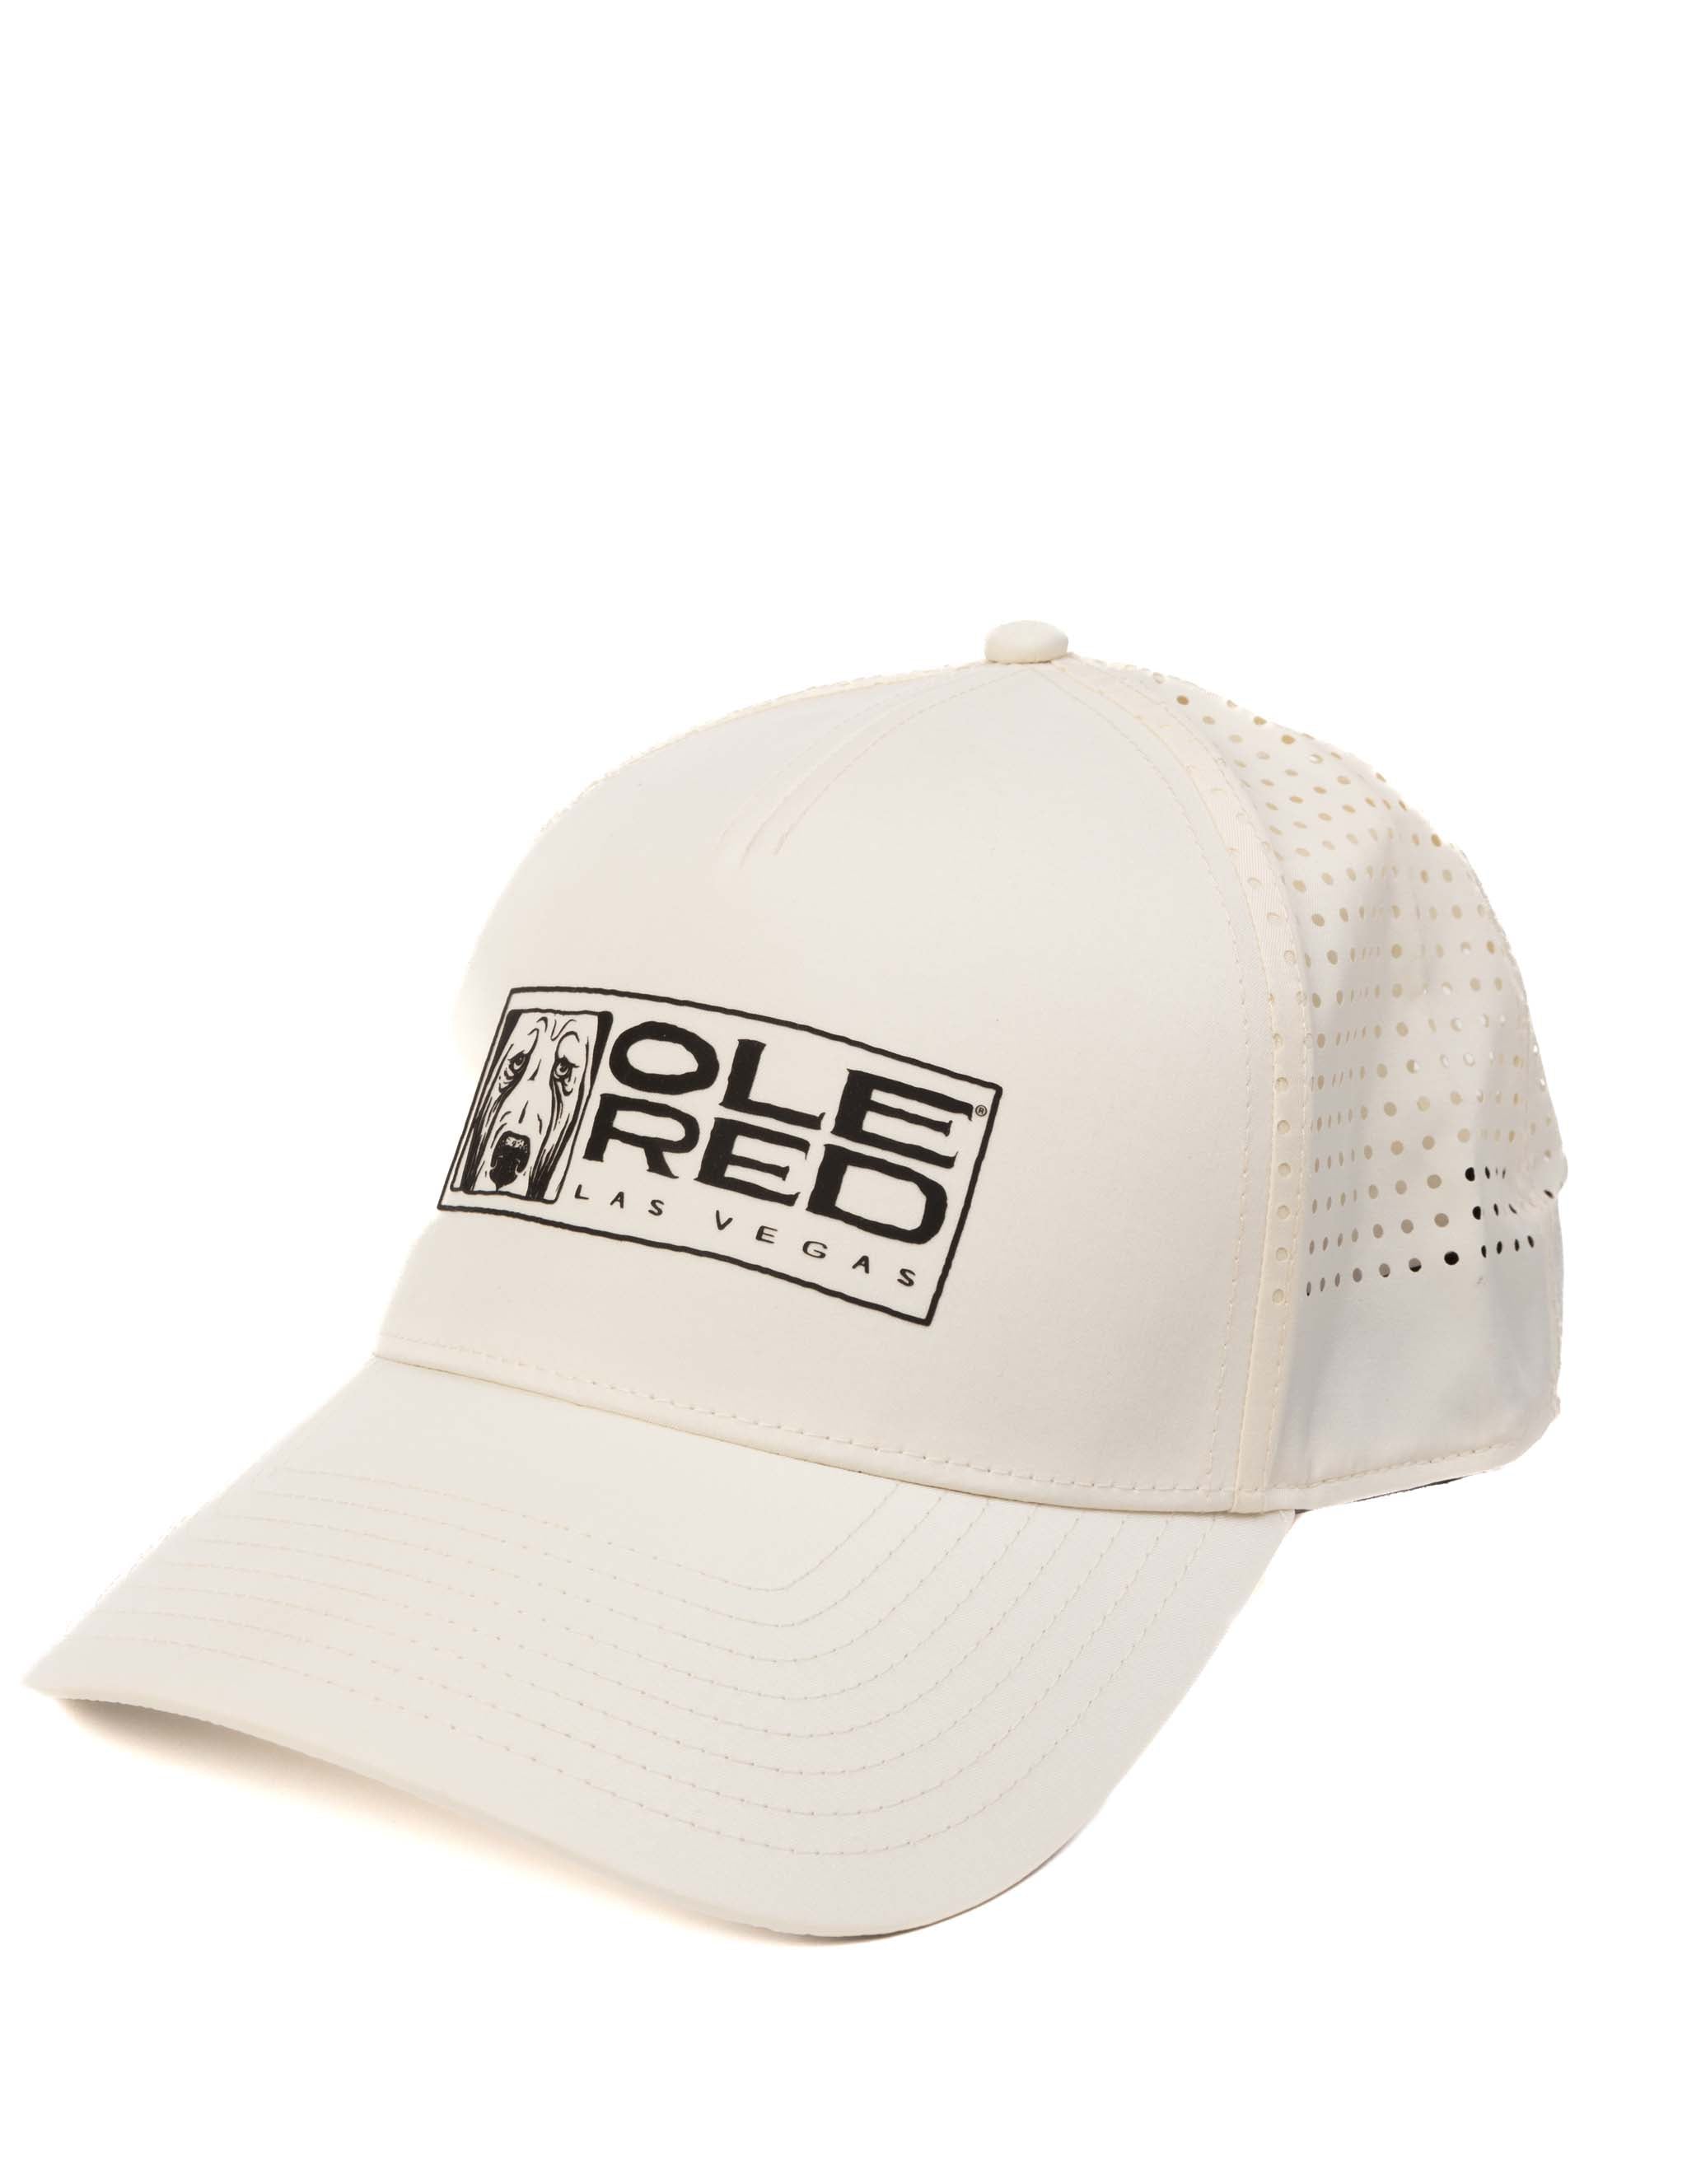 Ole Red Vegas Sport Logo Cream Performance Hat